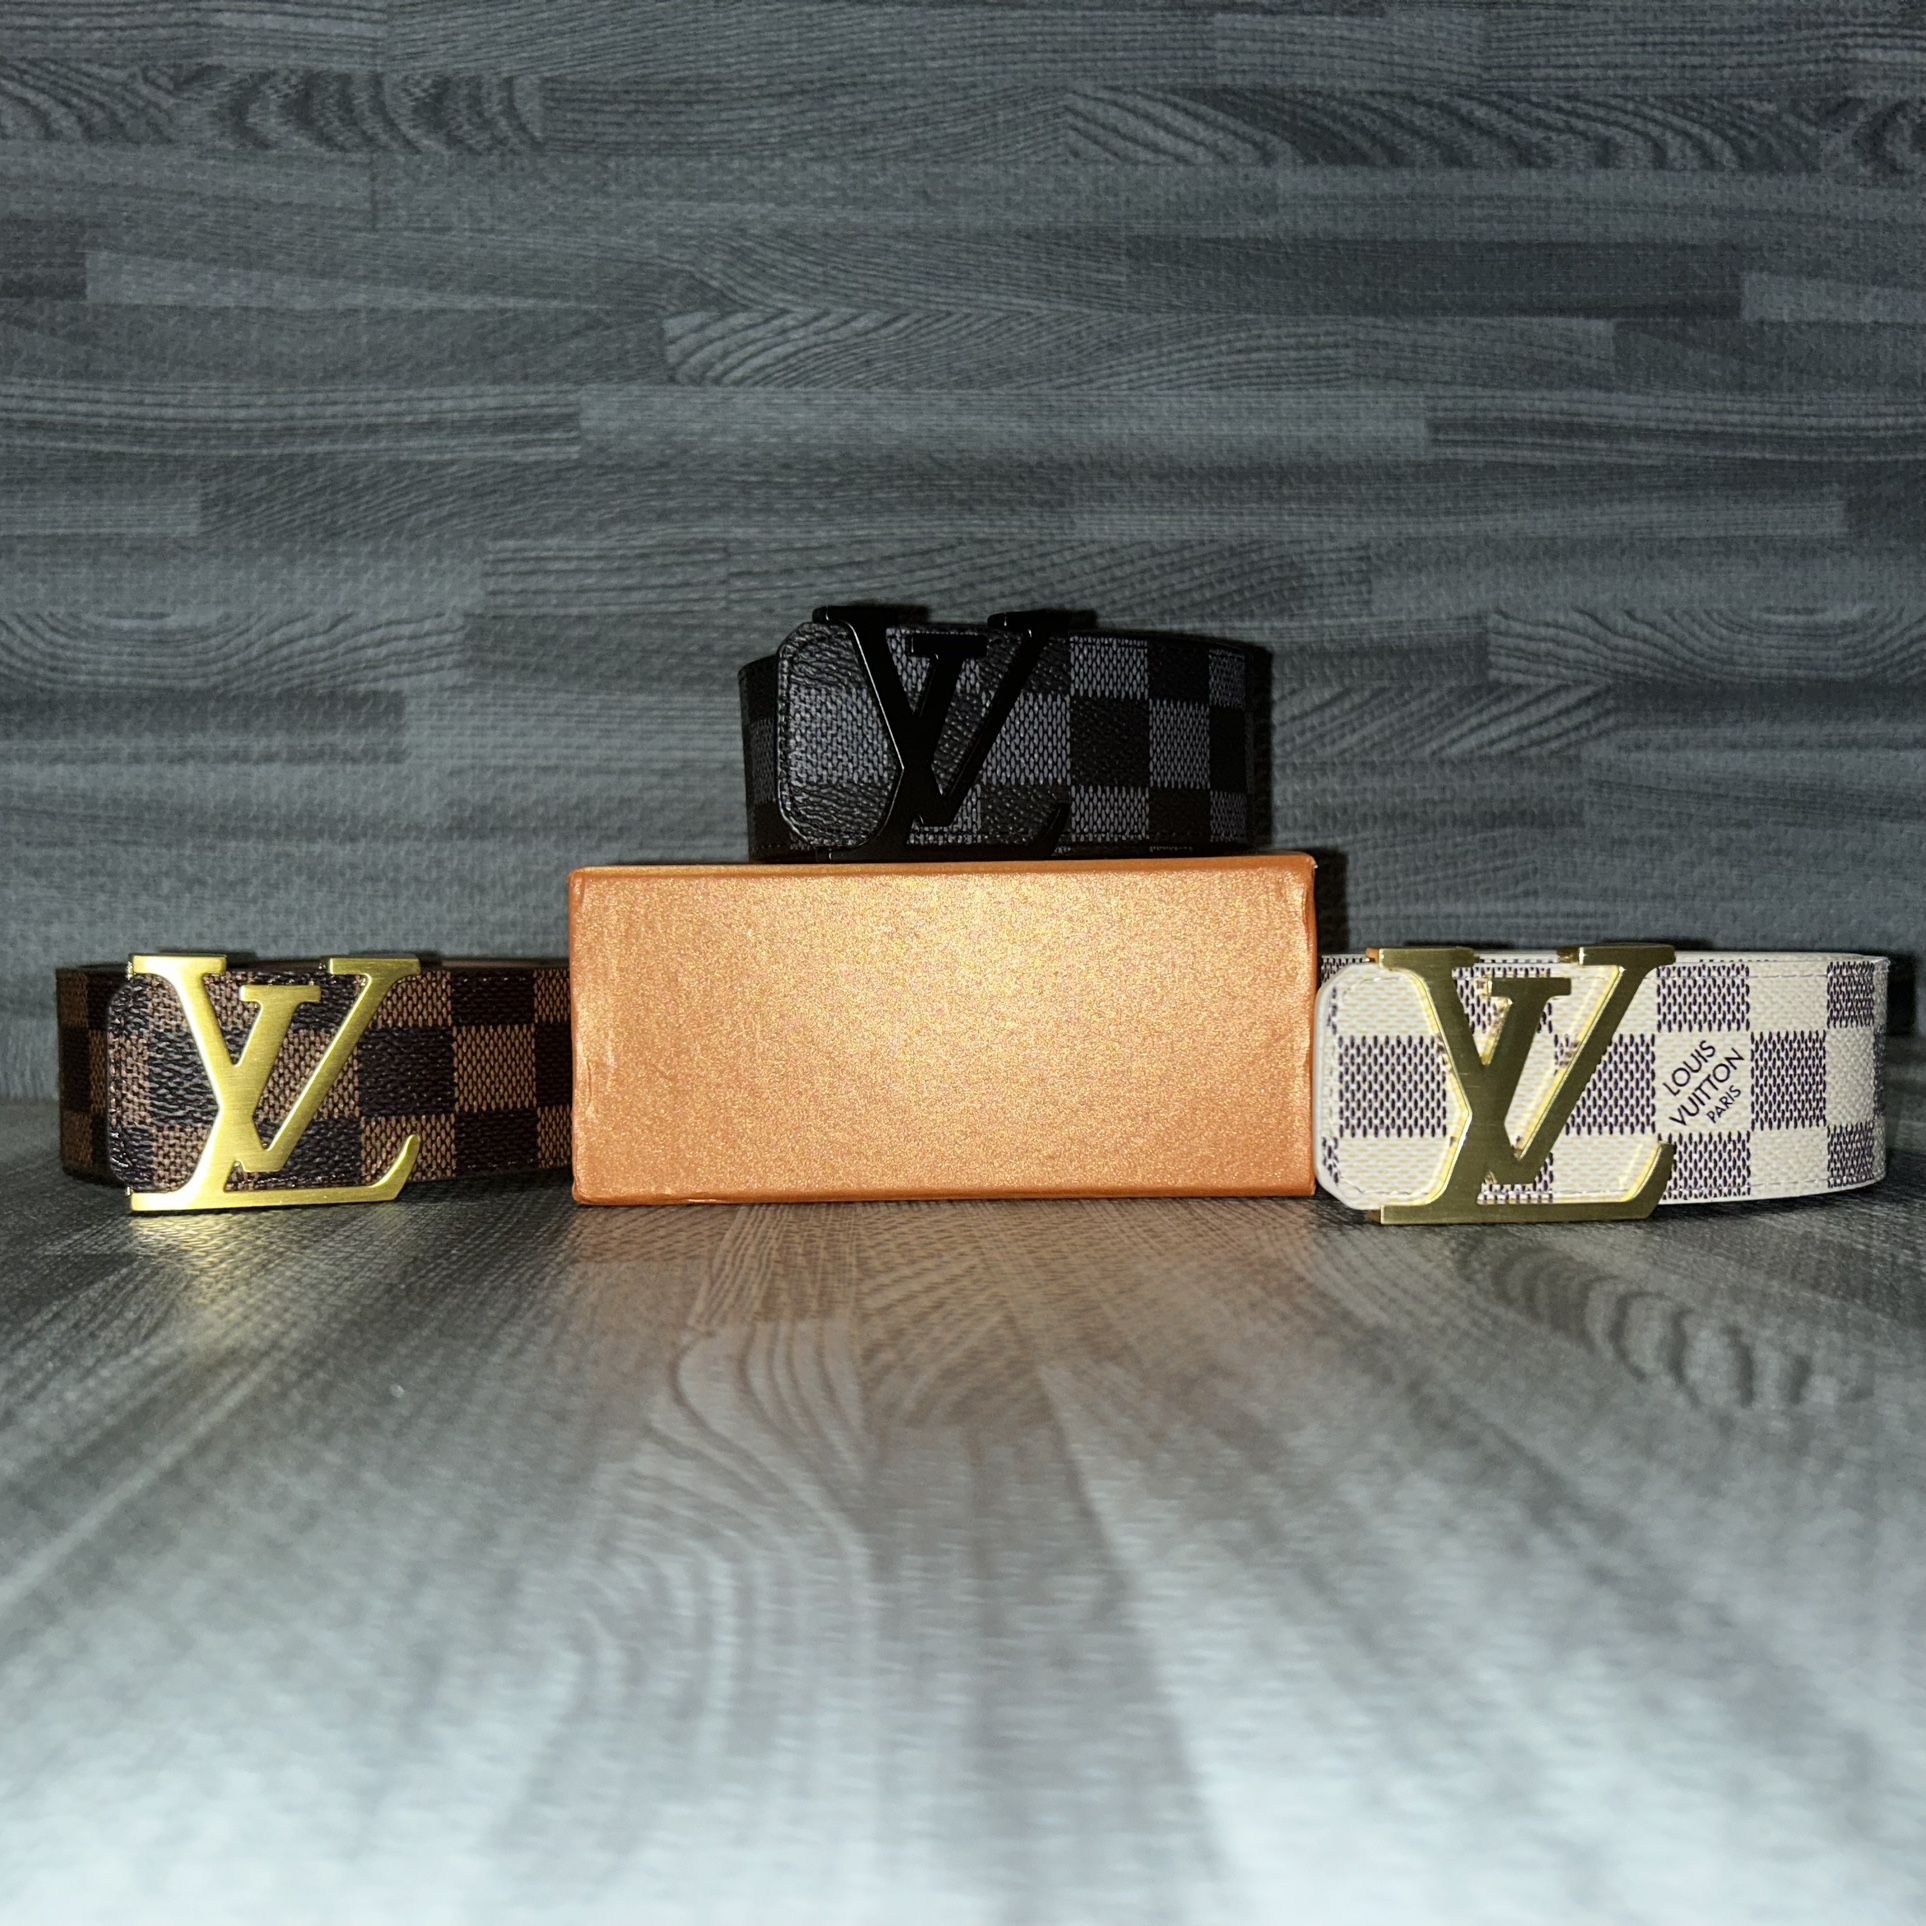 Black Louis Vuitton Belt for Sale in Goose Creek, SC - OfferUp